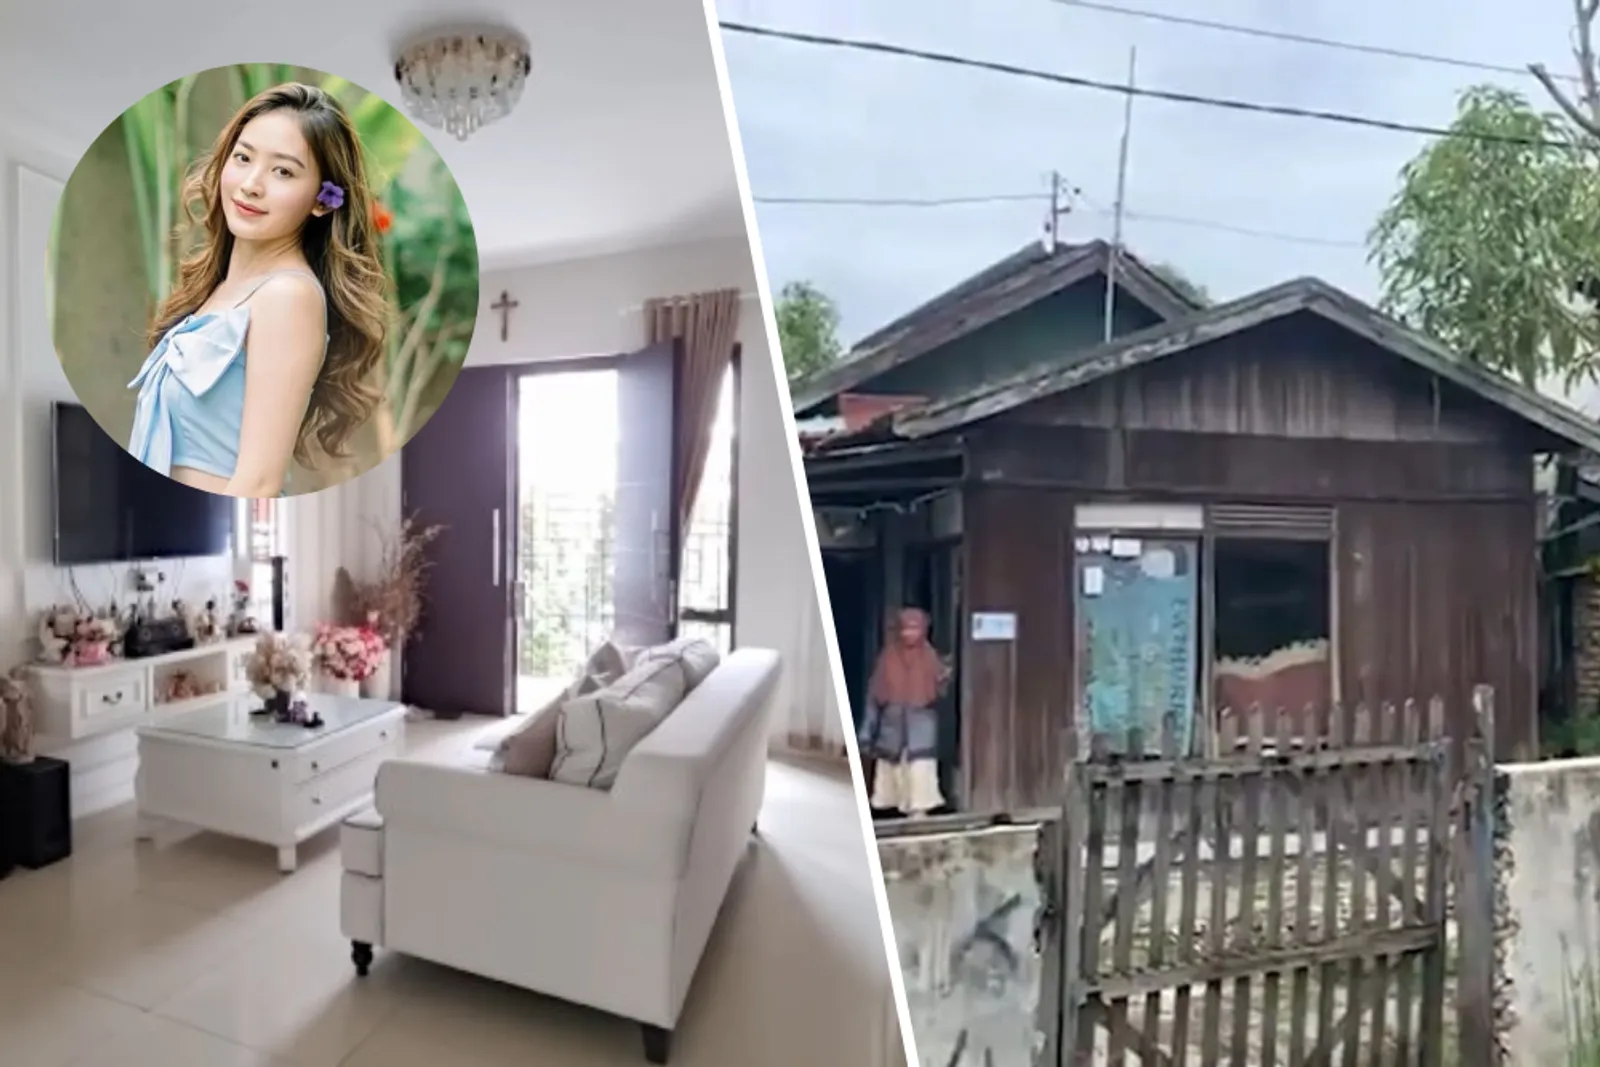 Intip Perbandingan Rumah Lama dan Baru Milik Natasha Wilona yang Viral